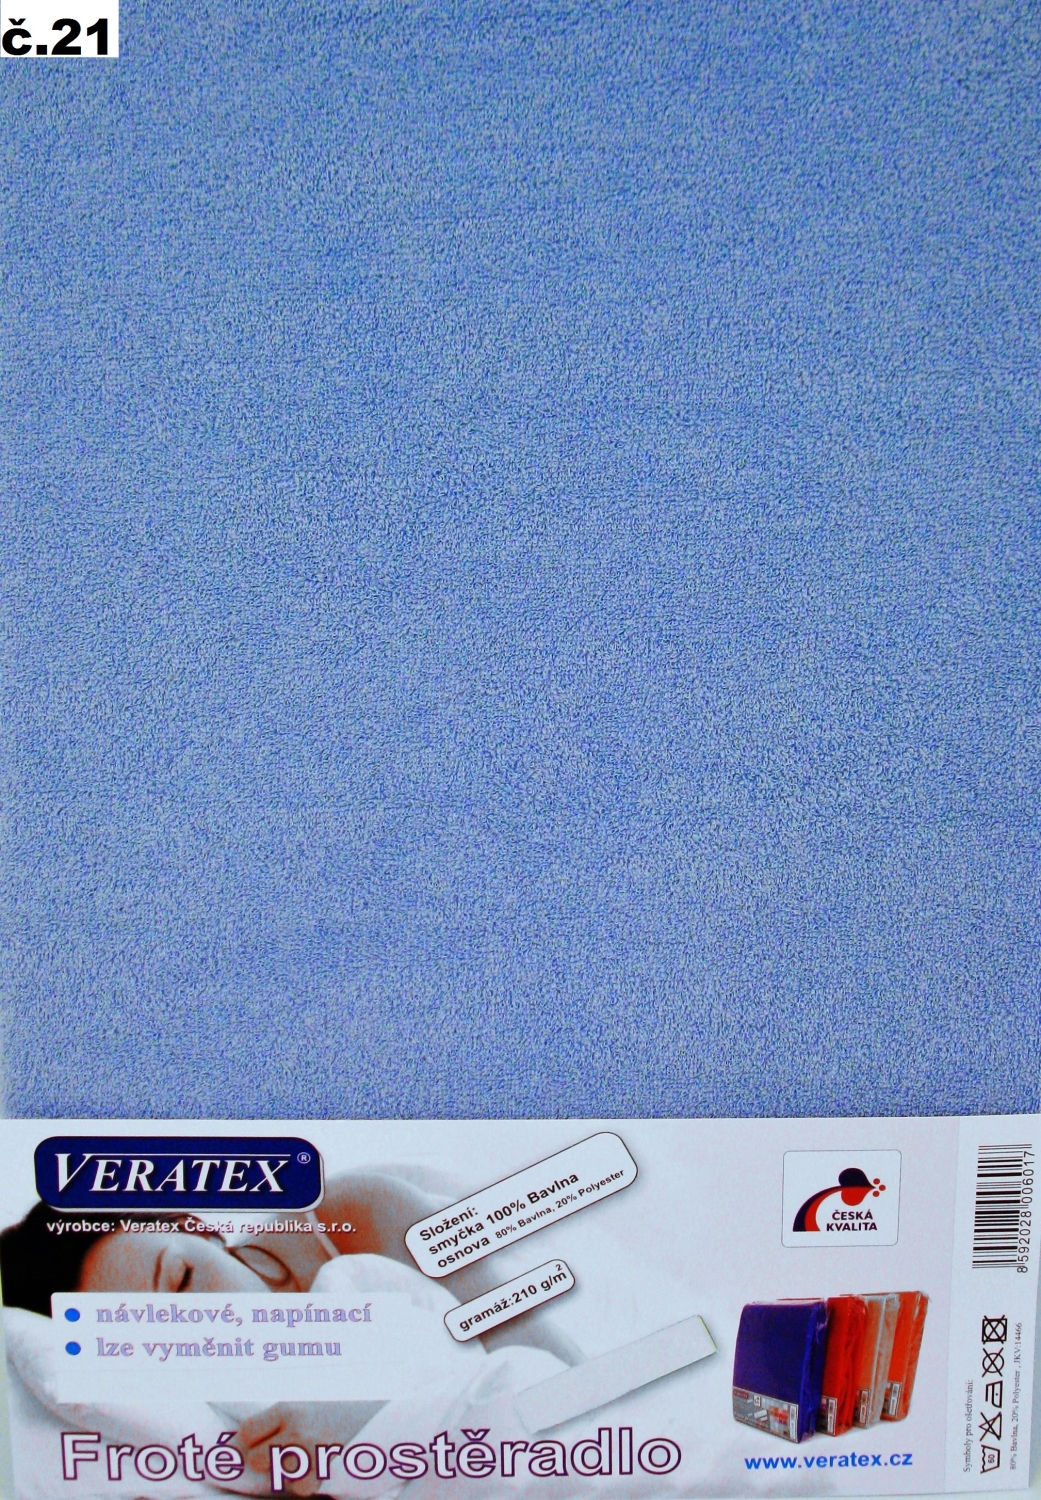 Veratex Froté prostěradlo postýlka 60 x 120 cm (č.21-sv.modrá)